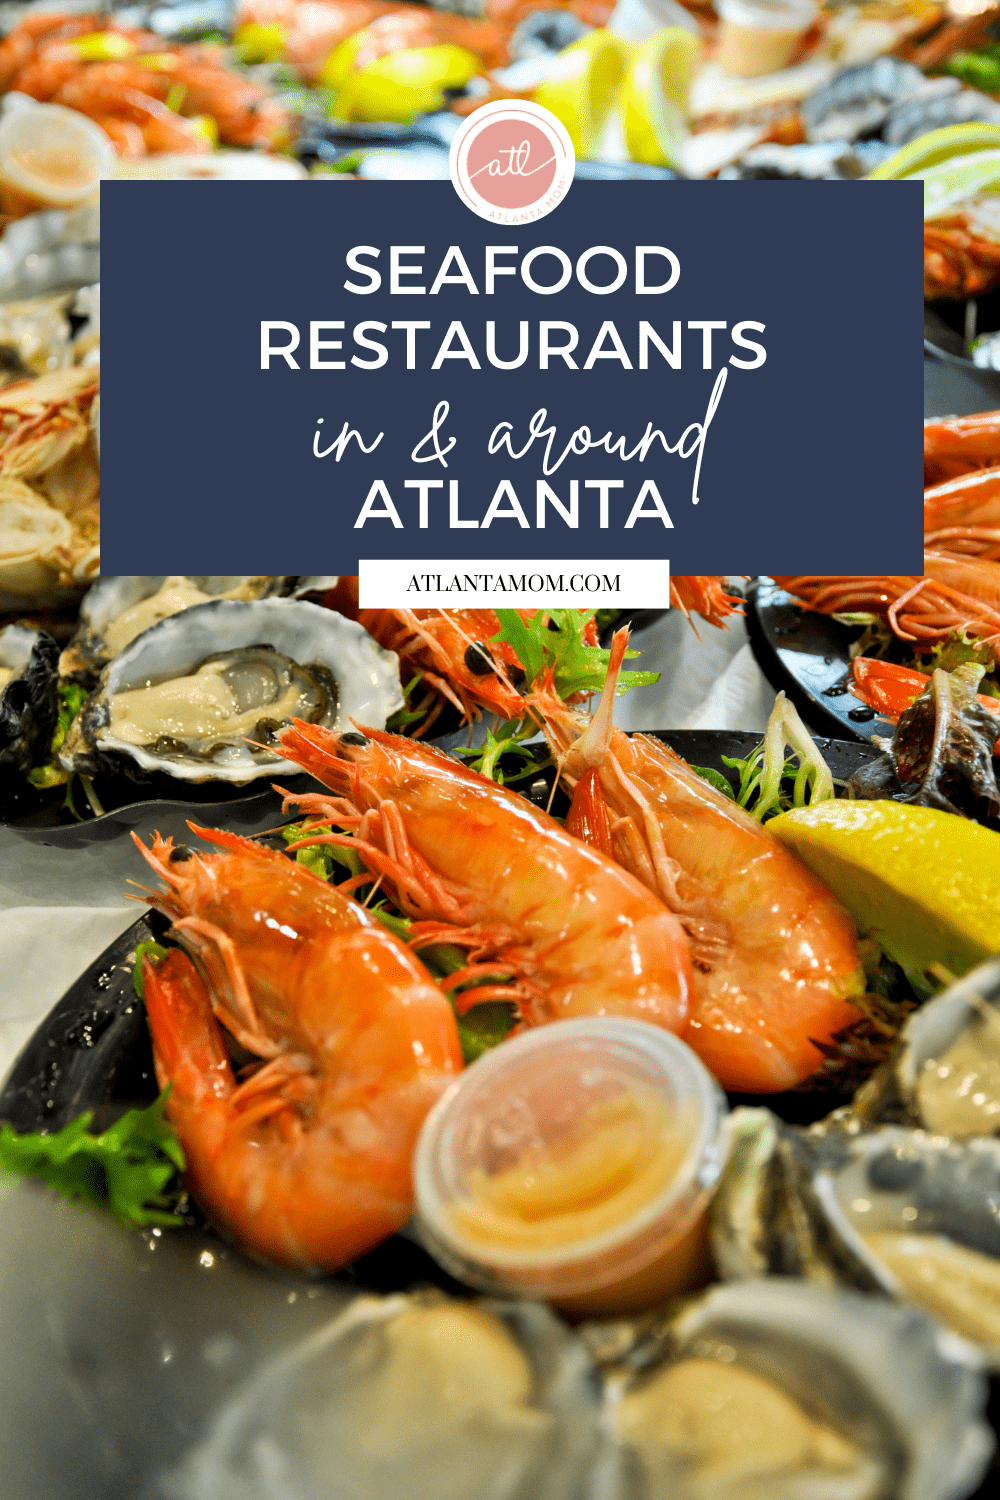 Where to Get Your Seafood Fix Around Atlanta